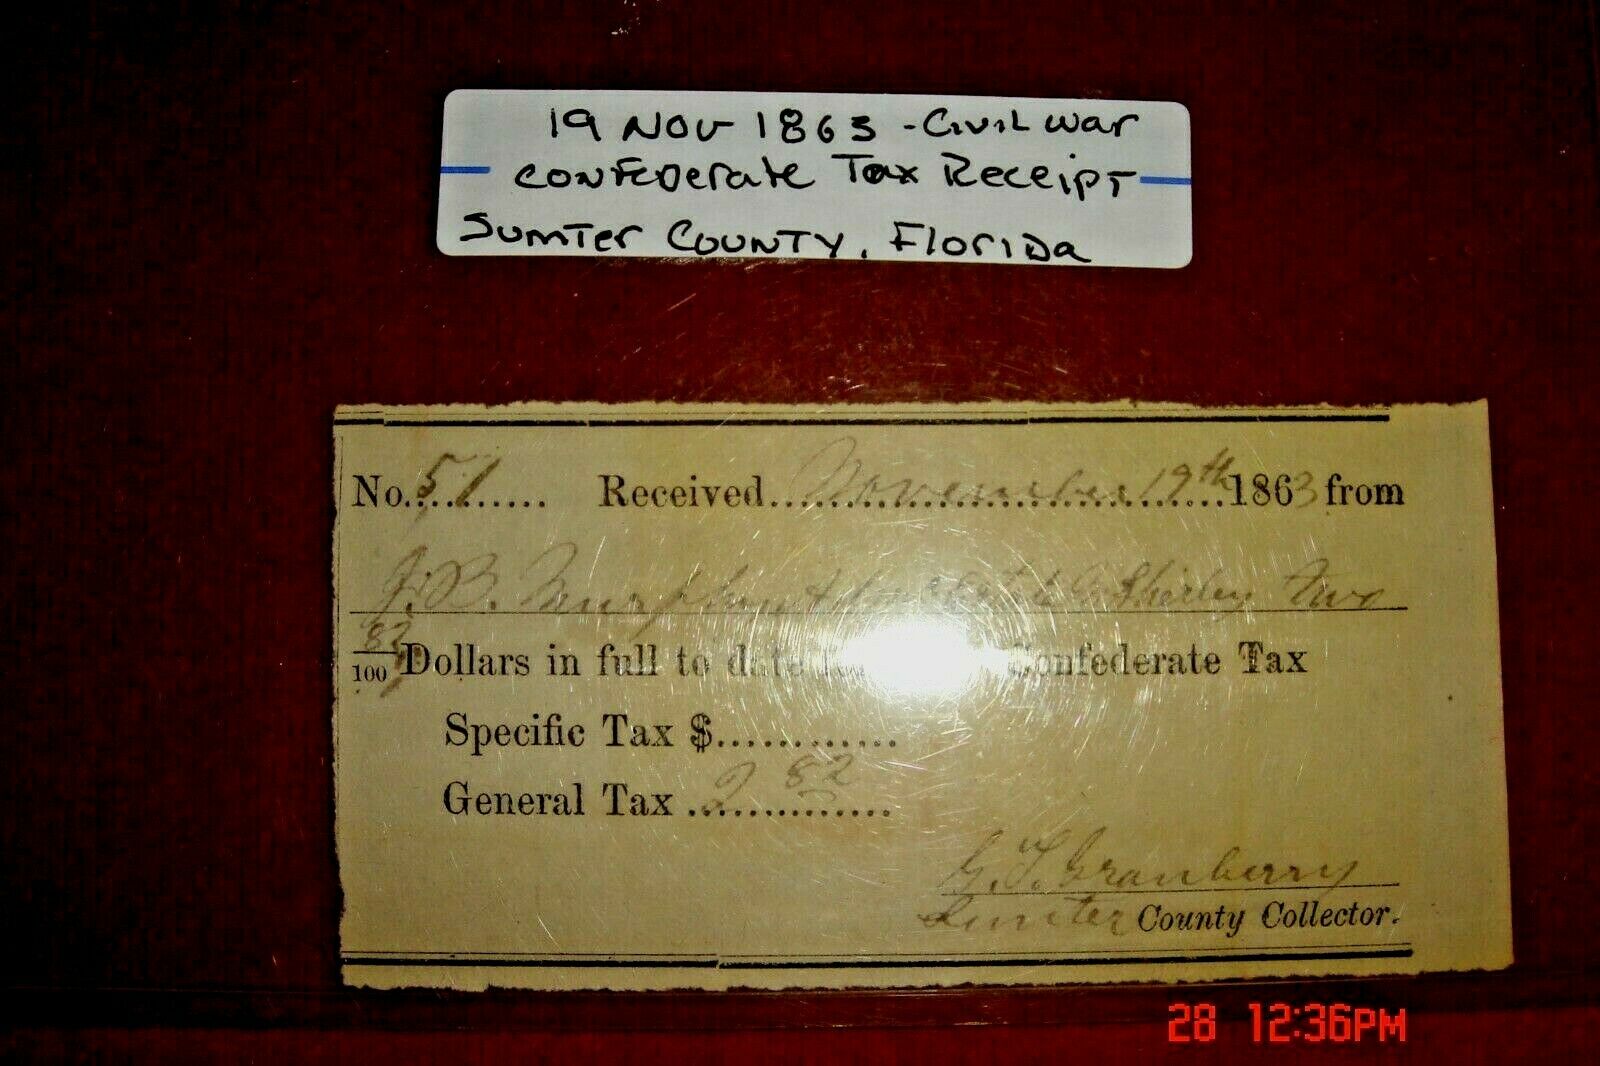 Civil War 19 November 1863 Confederate Tax Receipt From Sumter County Florida